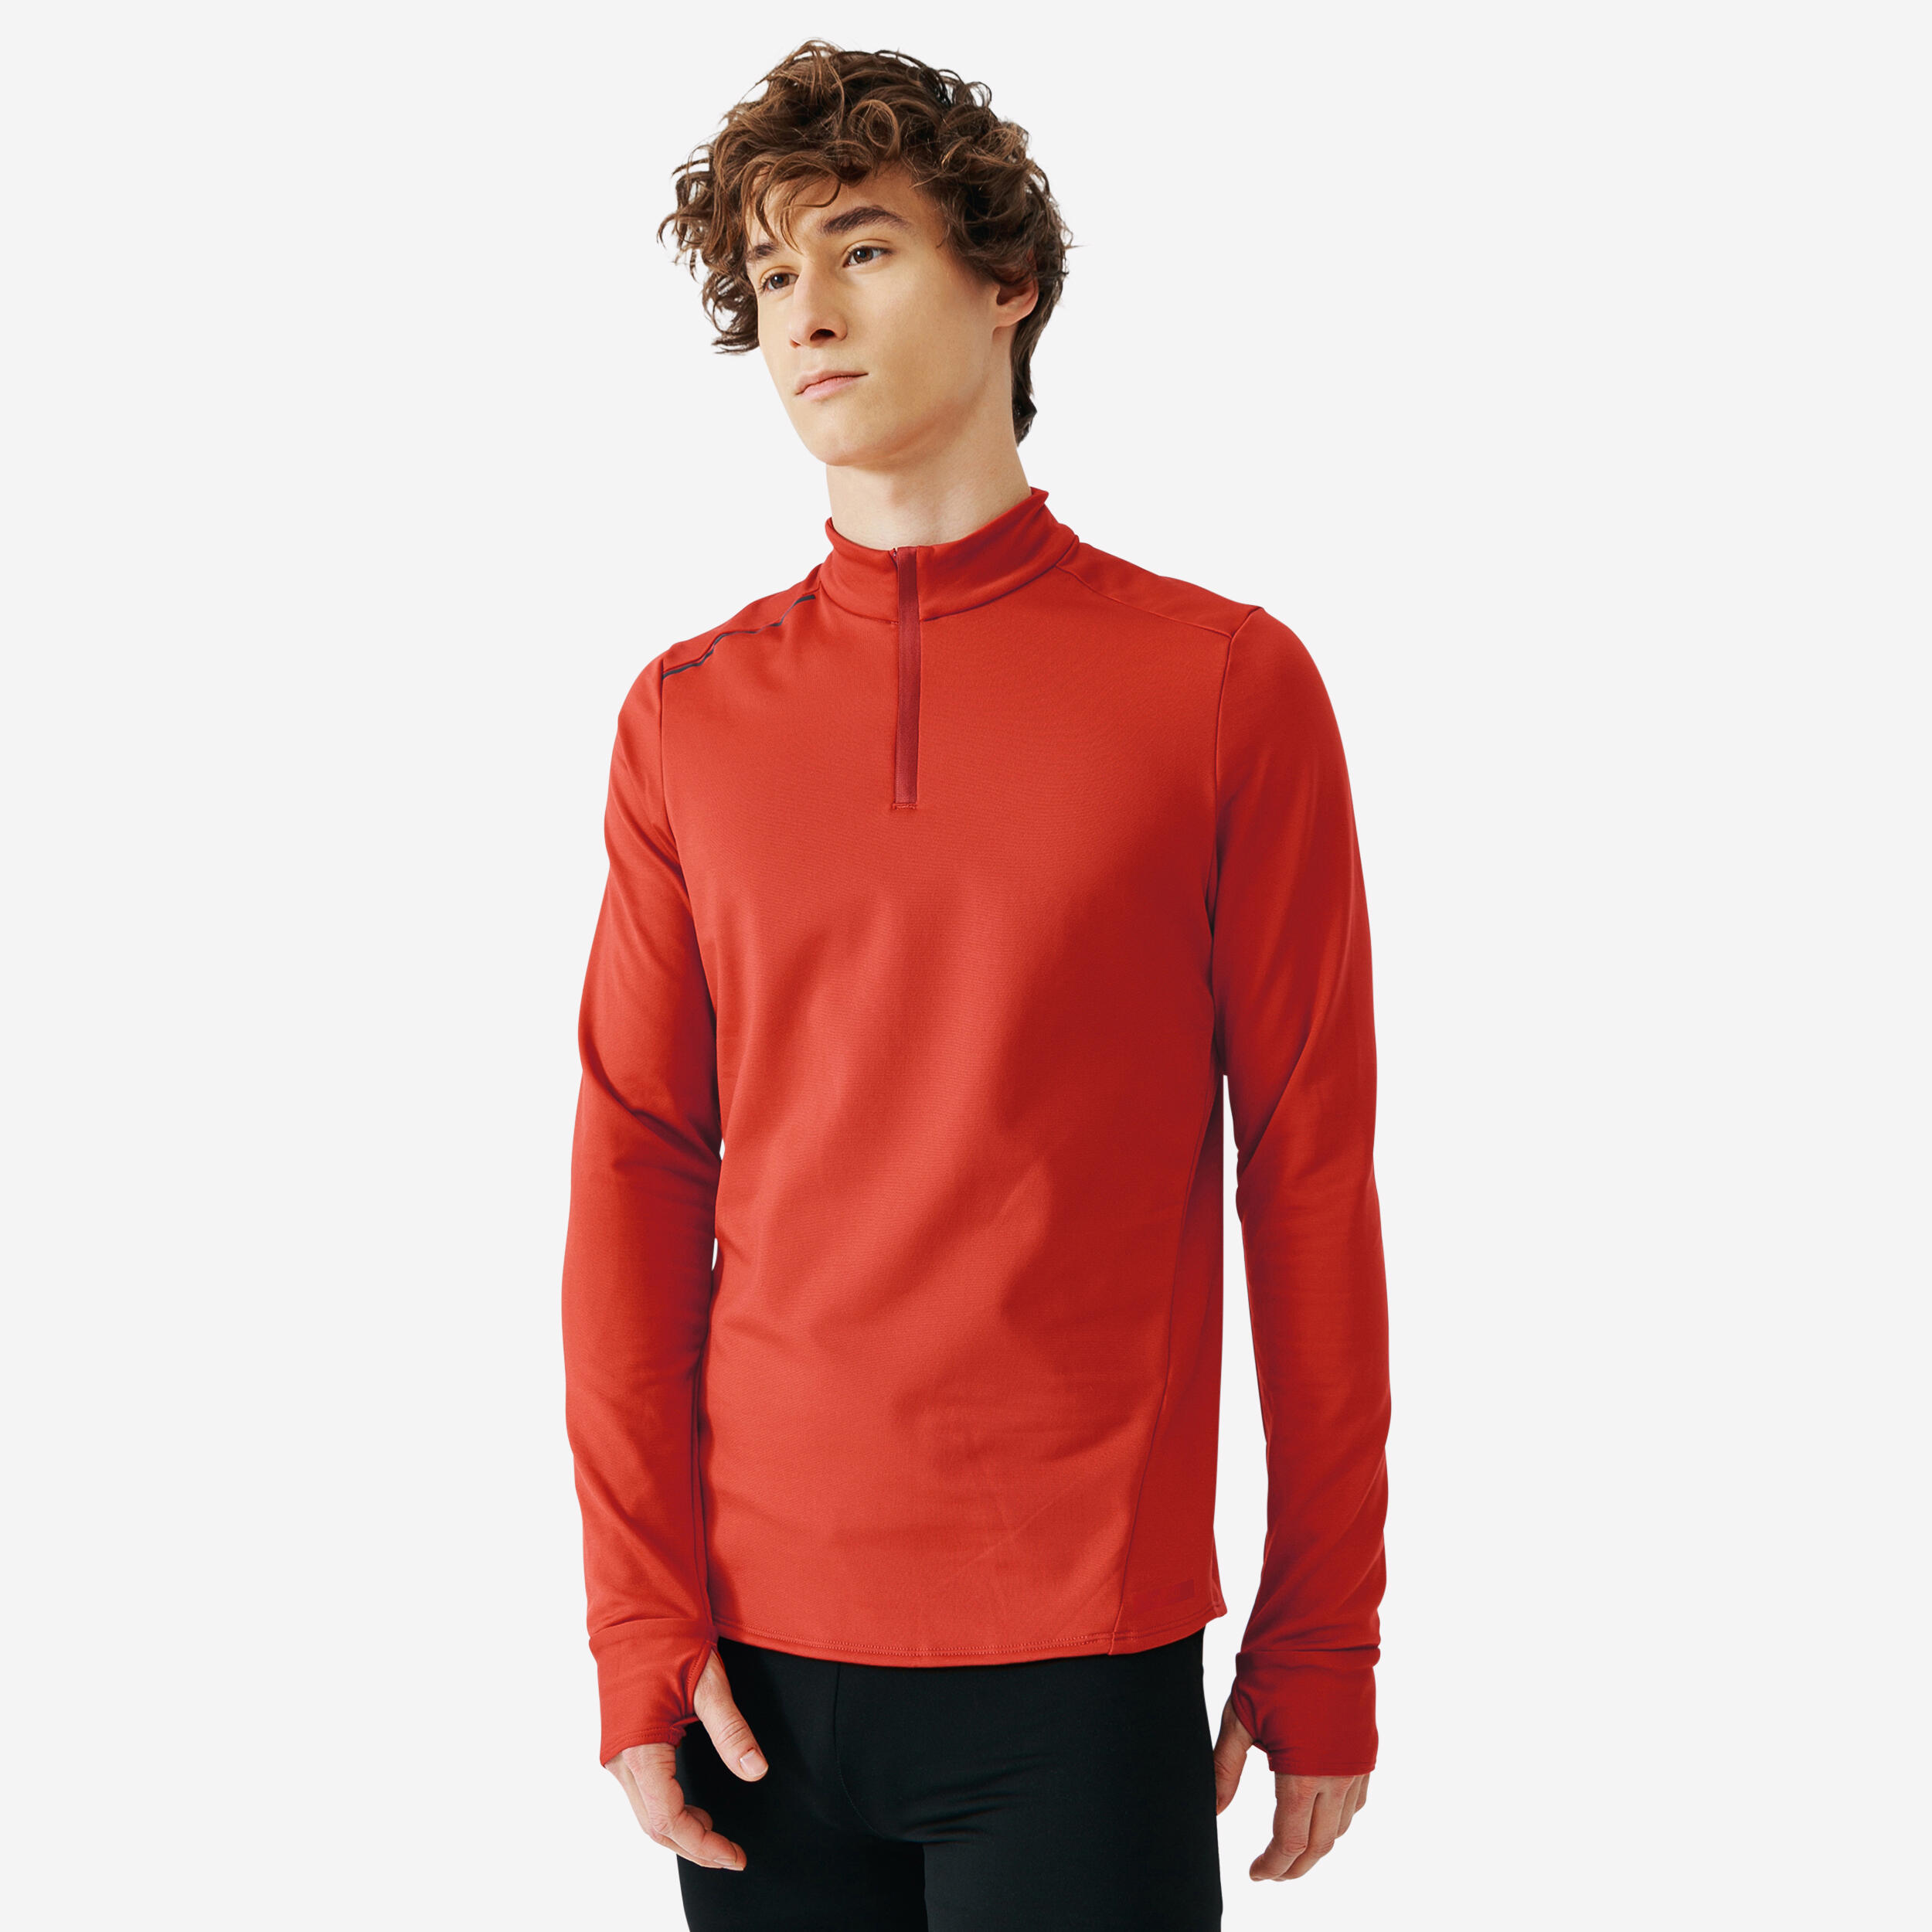 KALENJI Kalenji Men's Running Warm Long-Sleeved T-Shirt - brick red